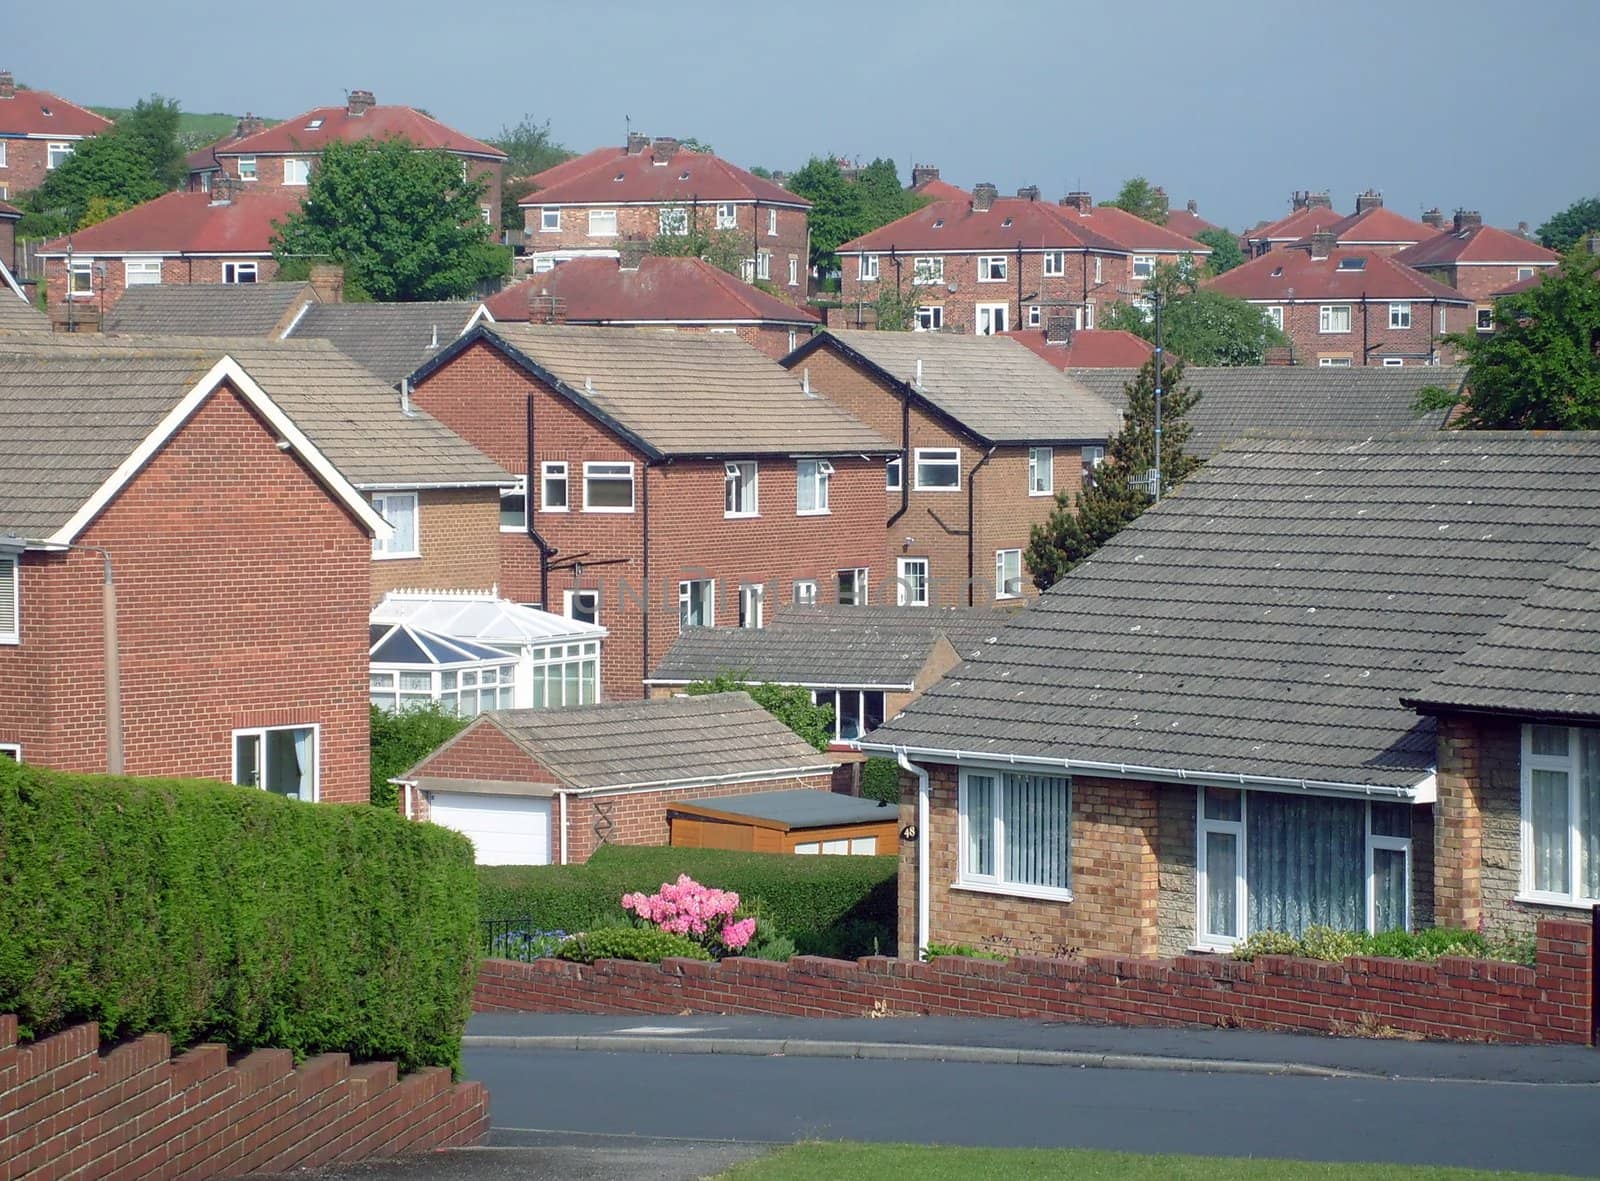 Typical English housing estate in Scarborough, England.